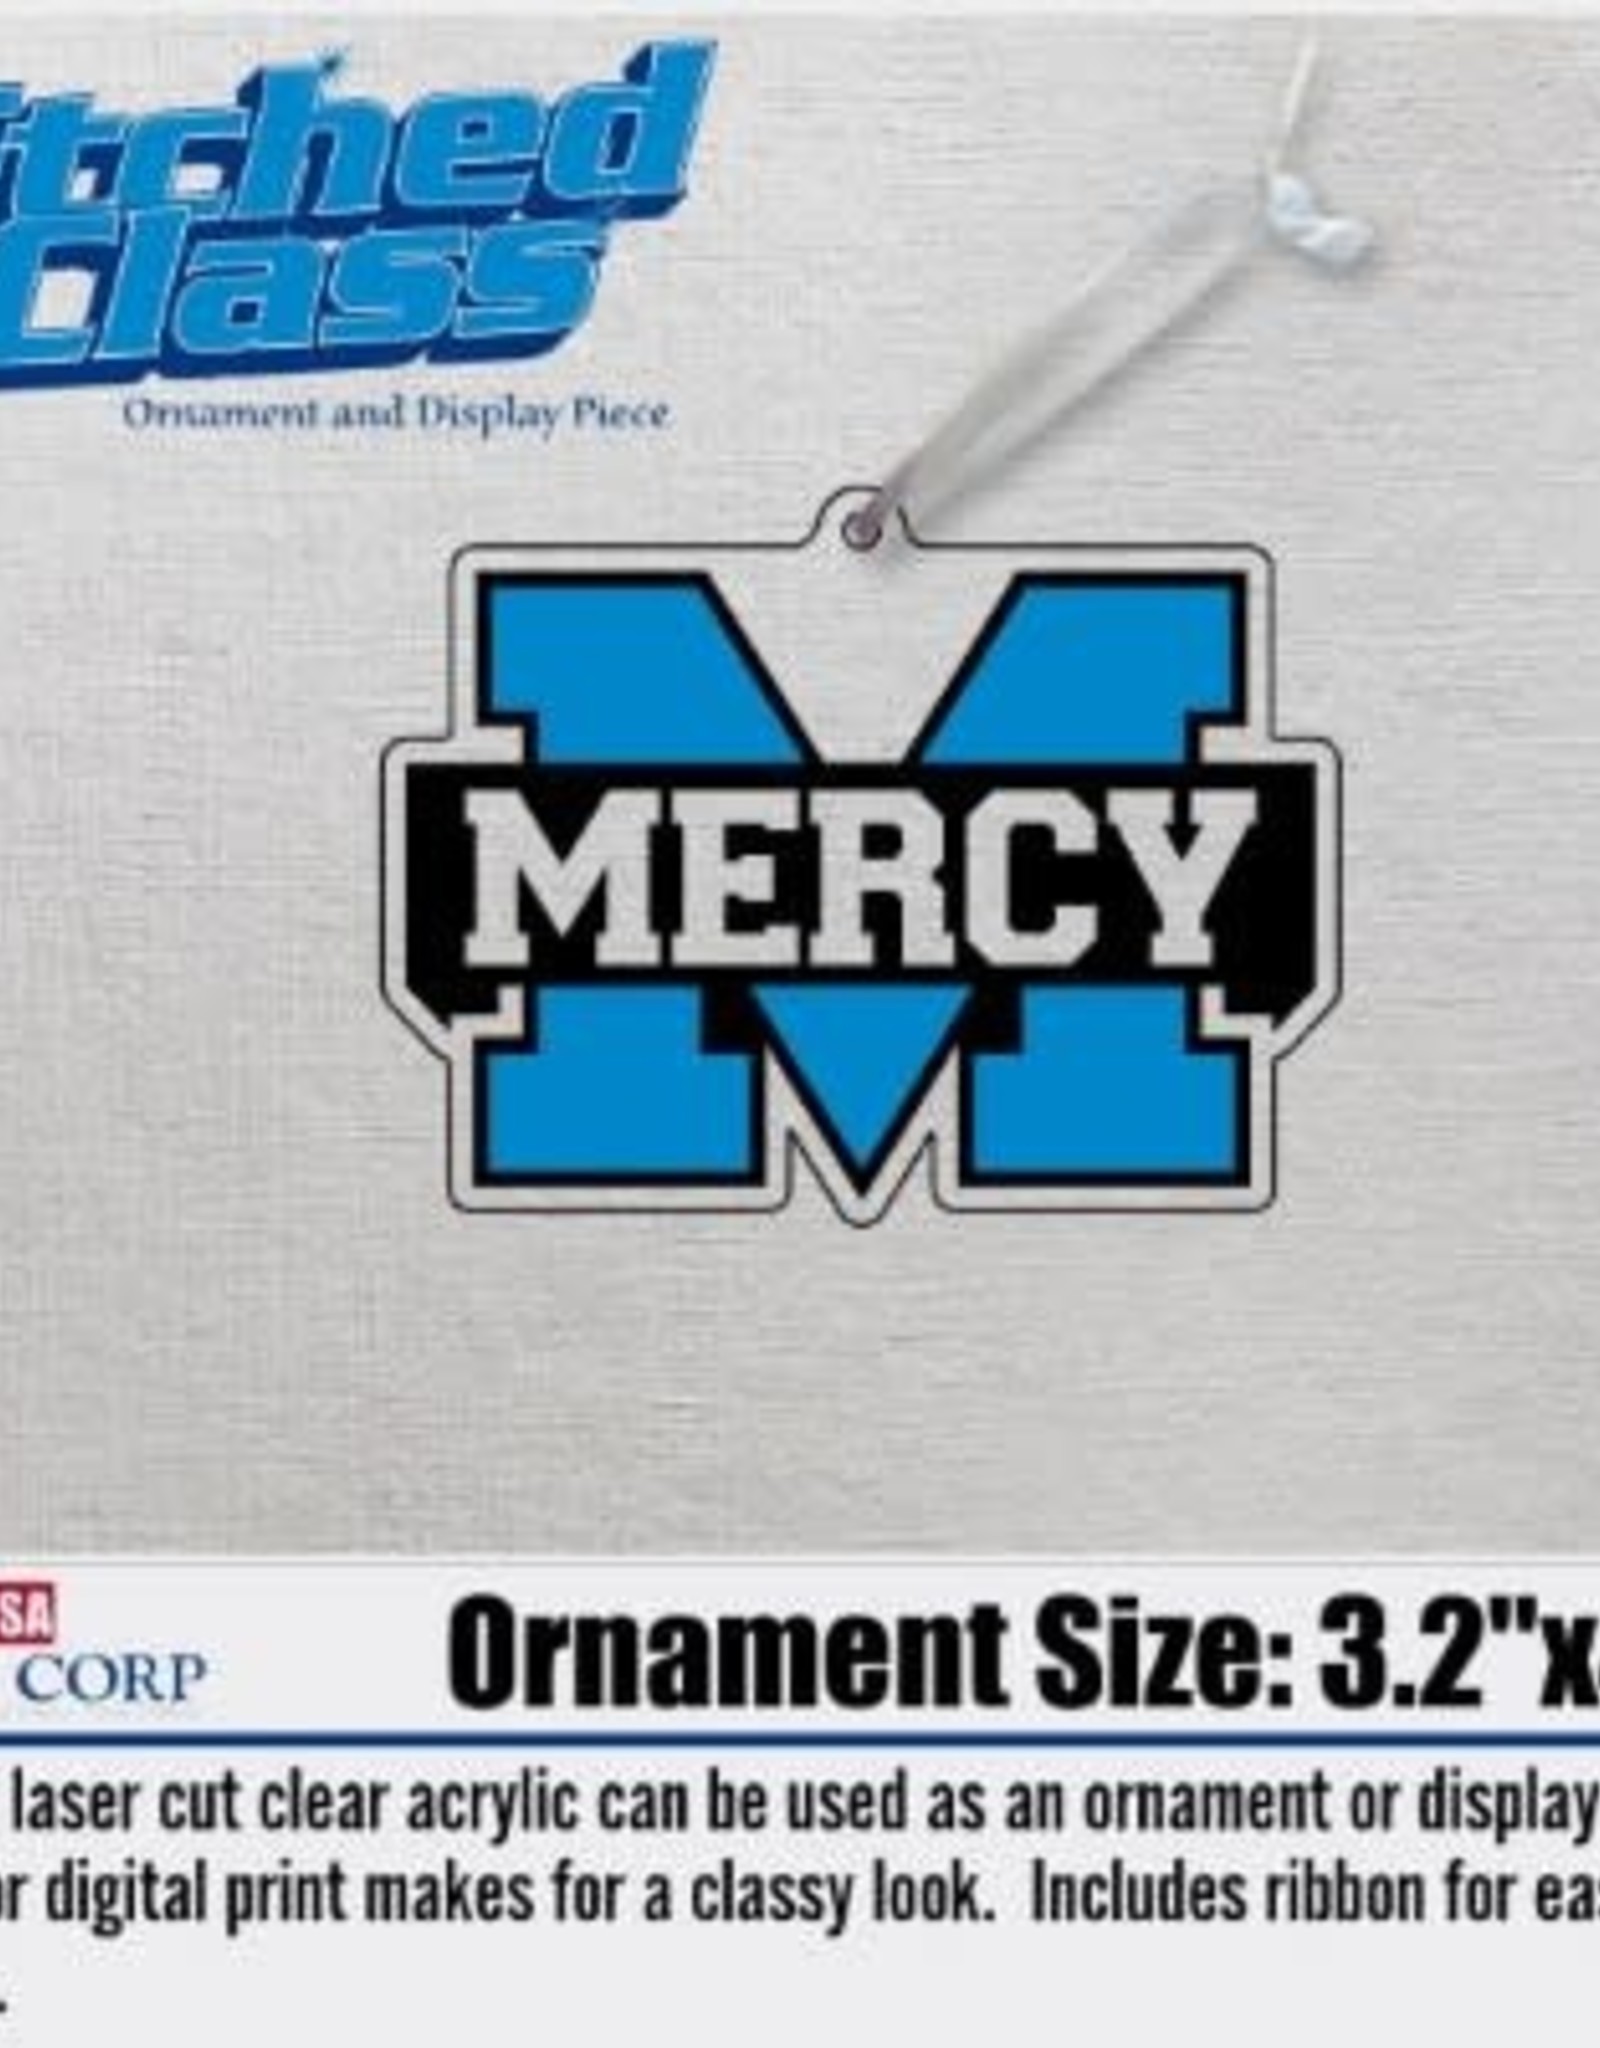 CDI Corp Mercy Power M Ornament